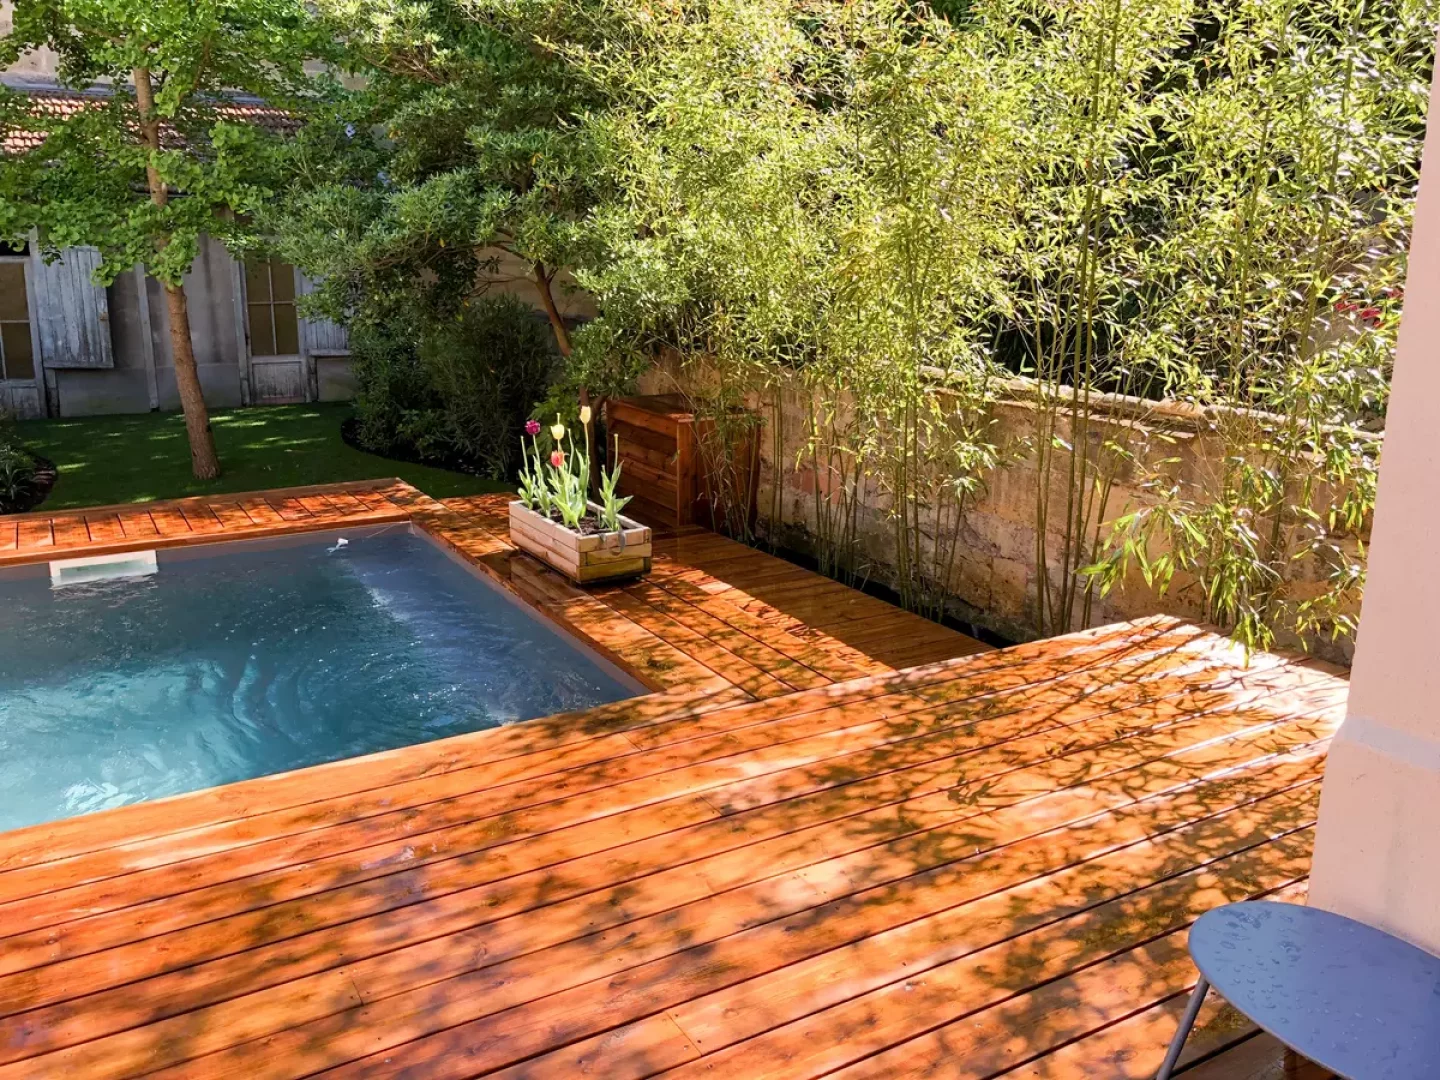 Petit jardin avec piscine terrasse et plantation